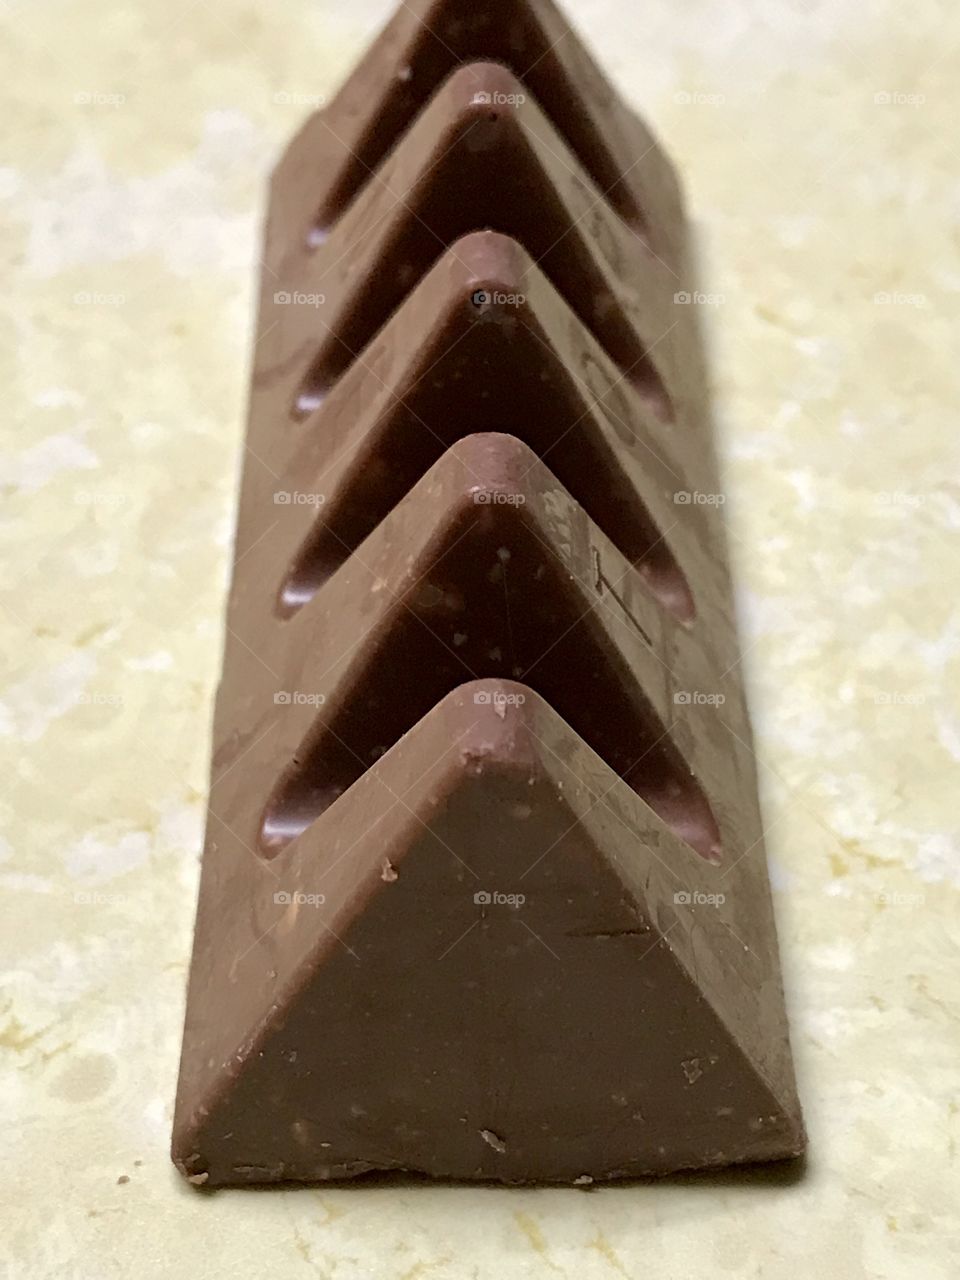 Chocolate candy bar